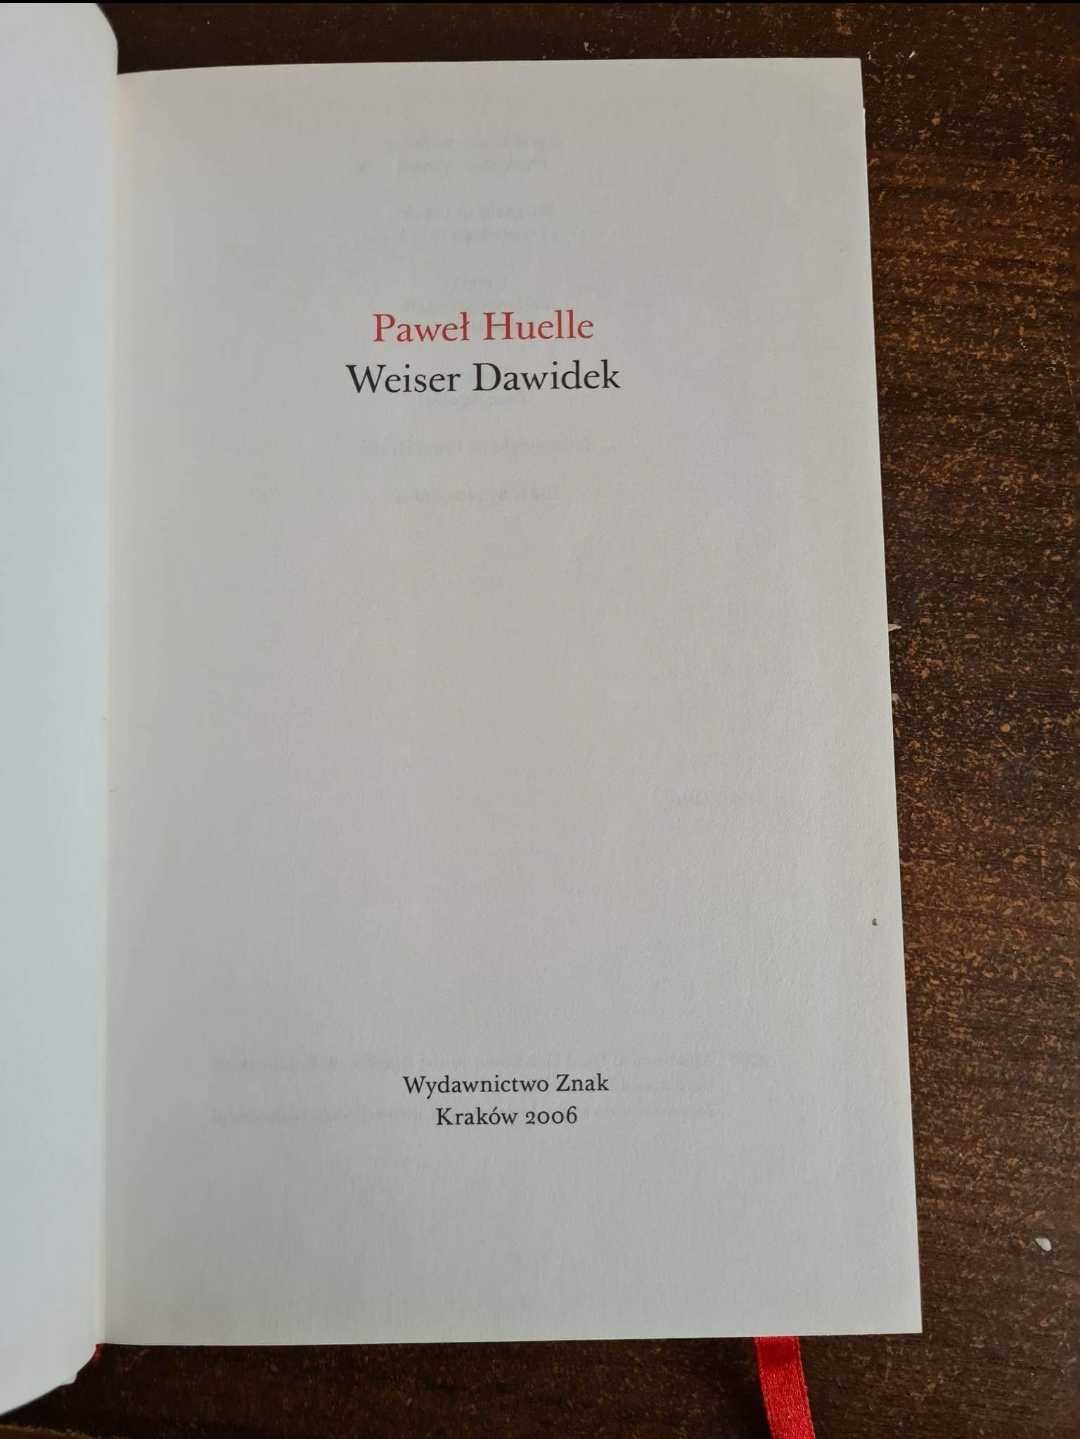 Paweł Huelle "Weiser Dawidek"